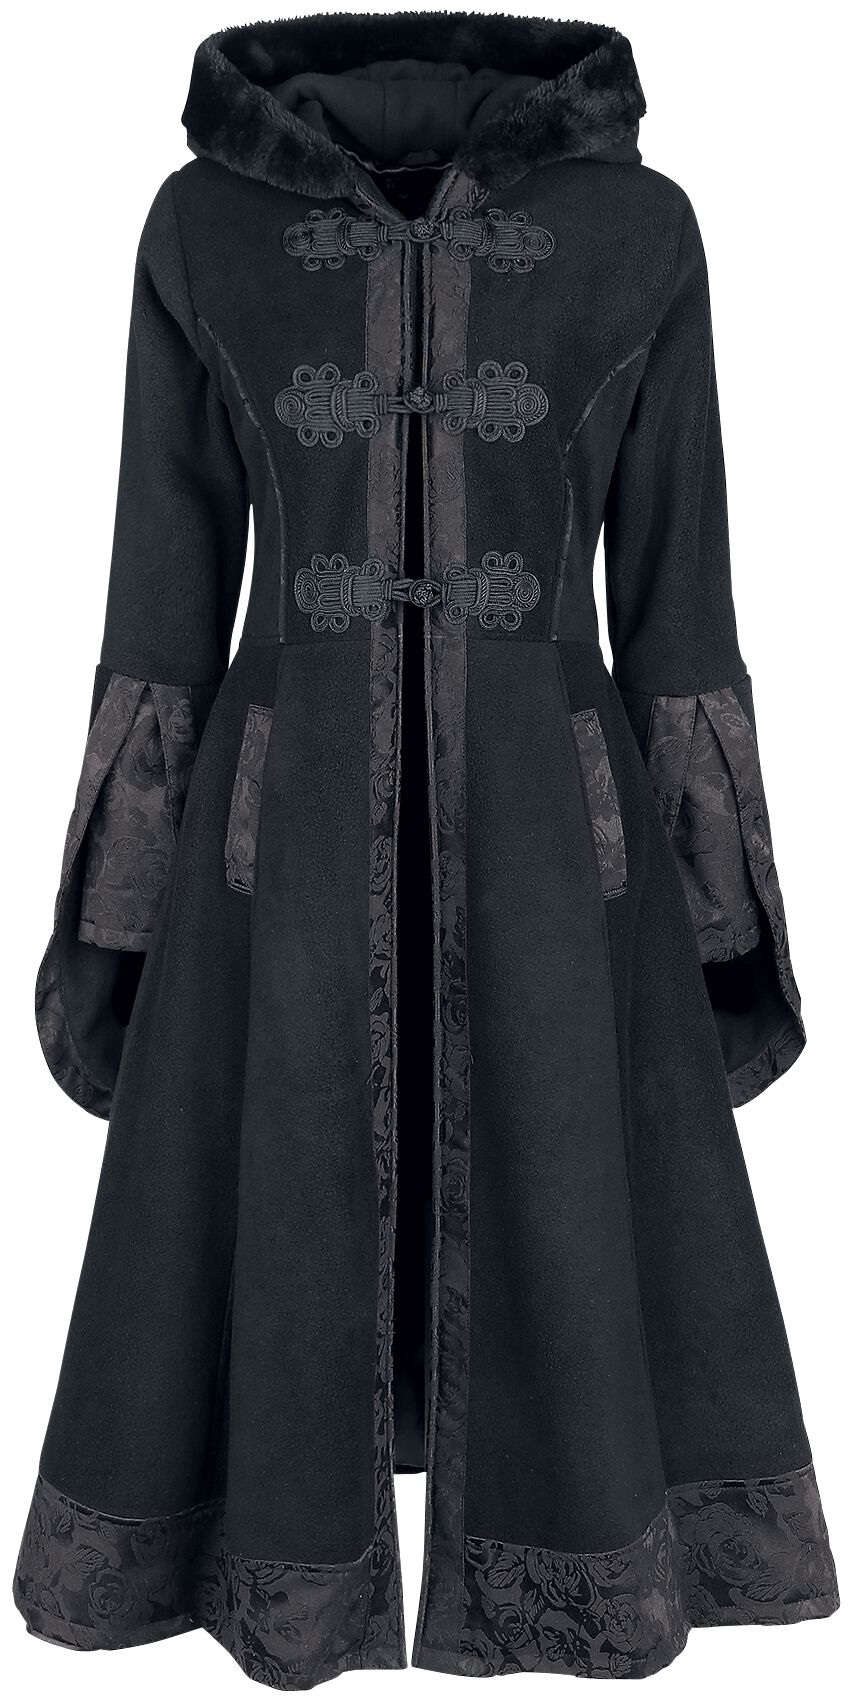 Poizen Industries Luella Coat Coats black